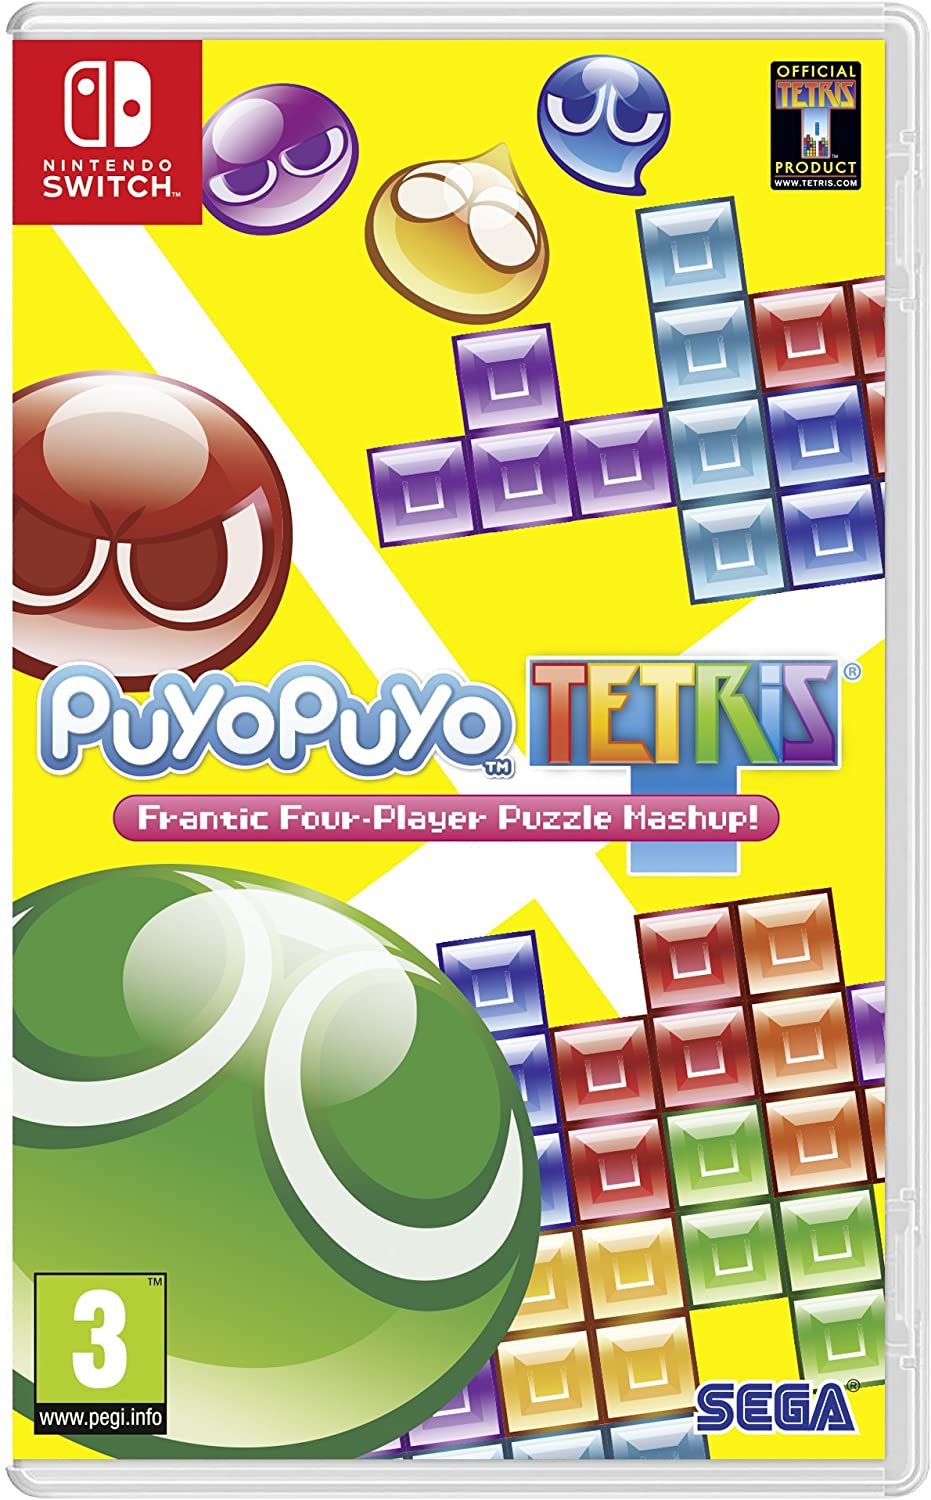 puyopuyo-tetris-switch